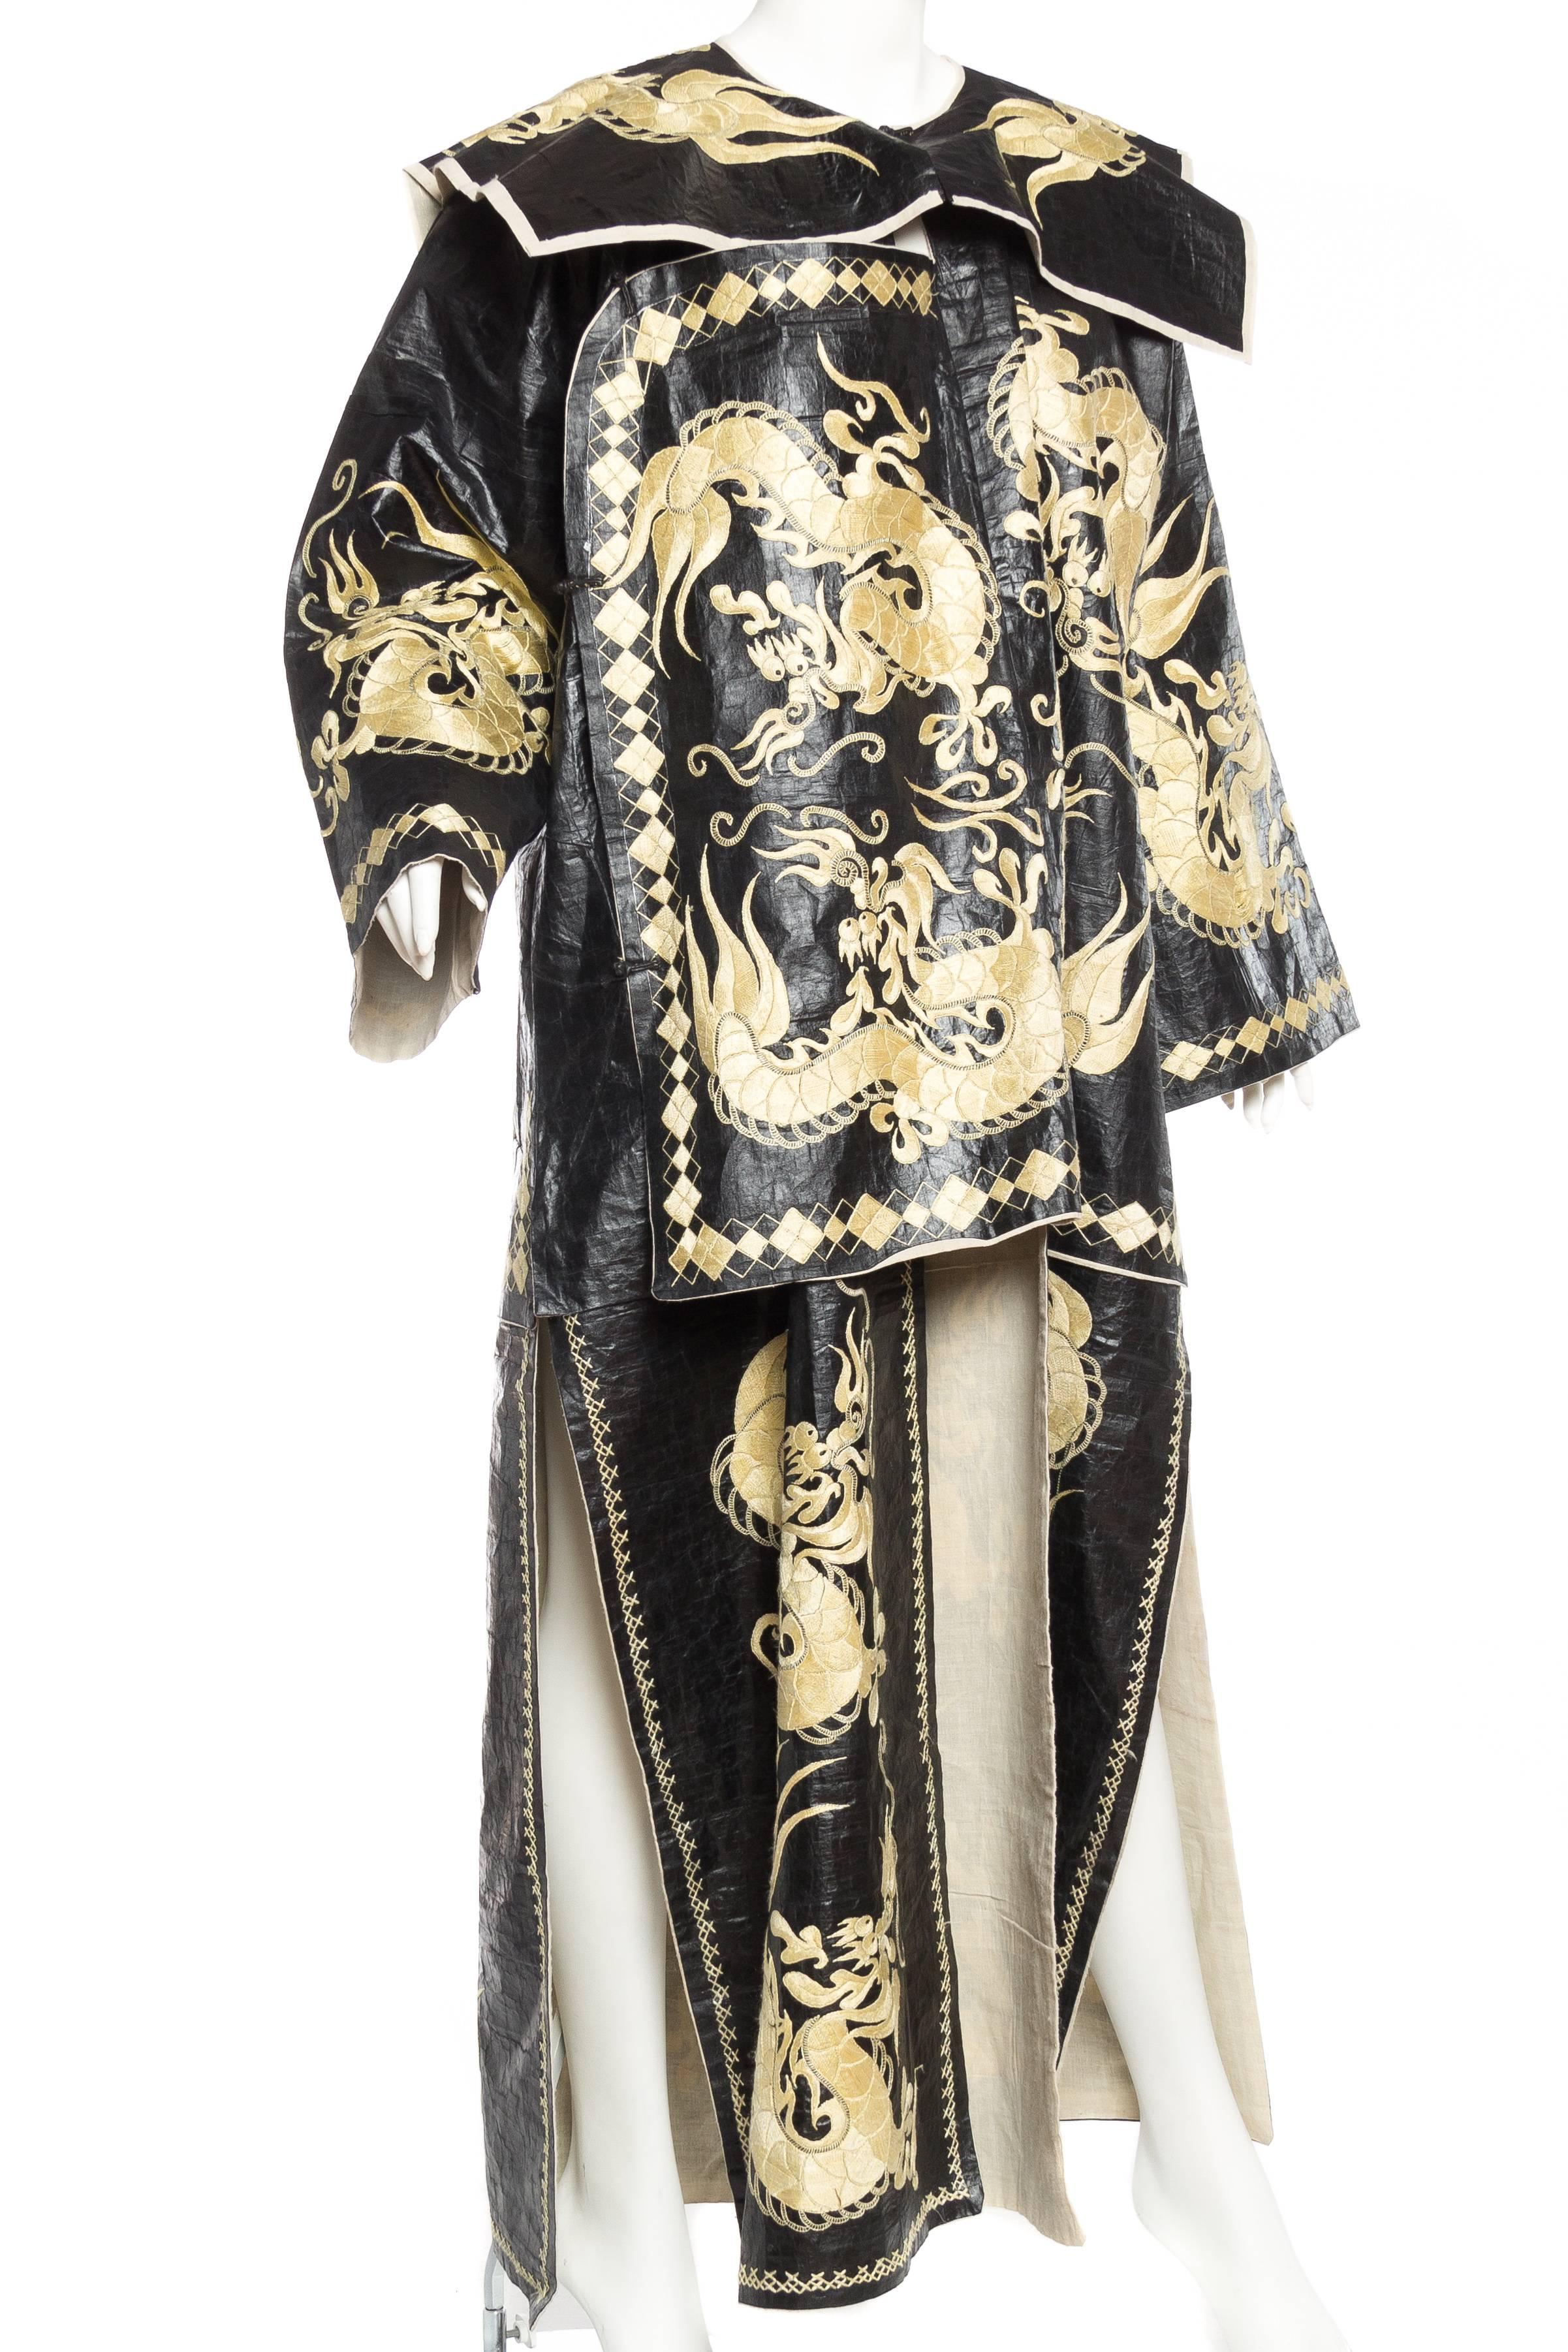 Women's or Men's Kimono Style Embroidered Chinese Dragon Coat 